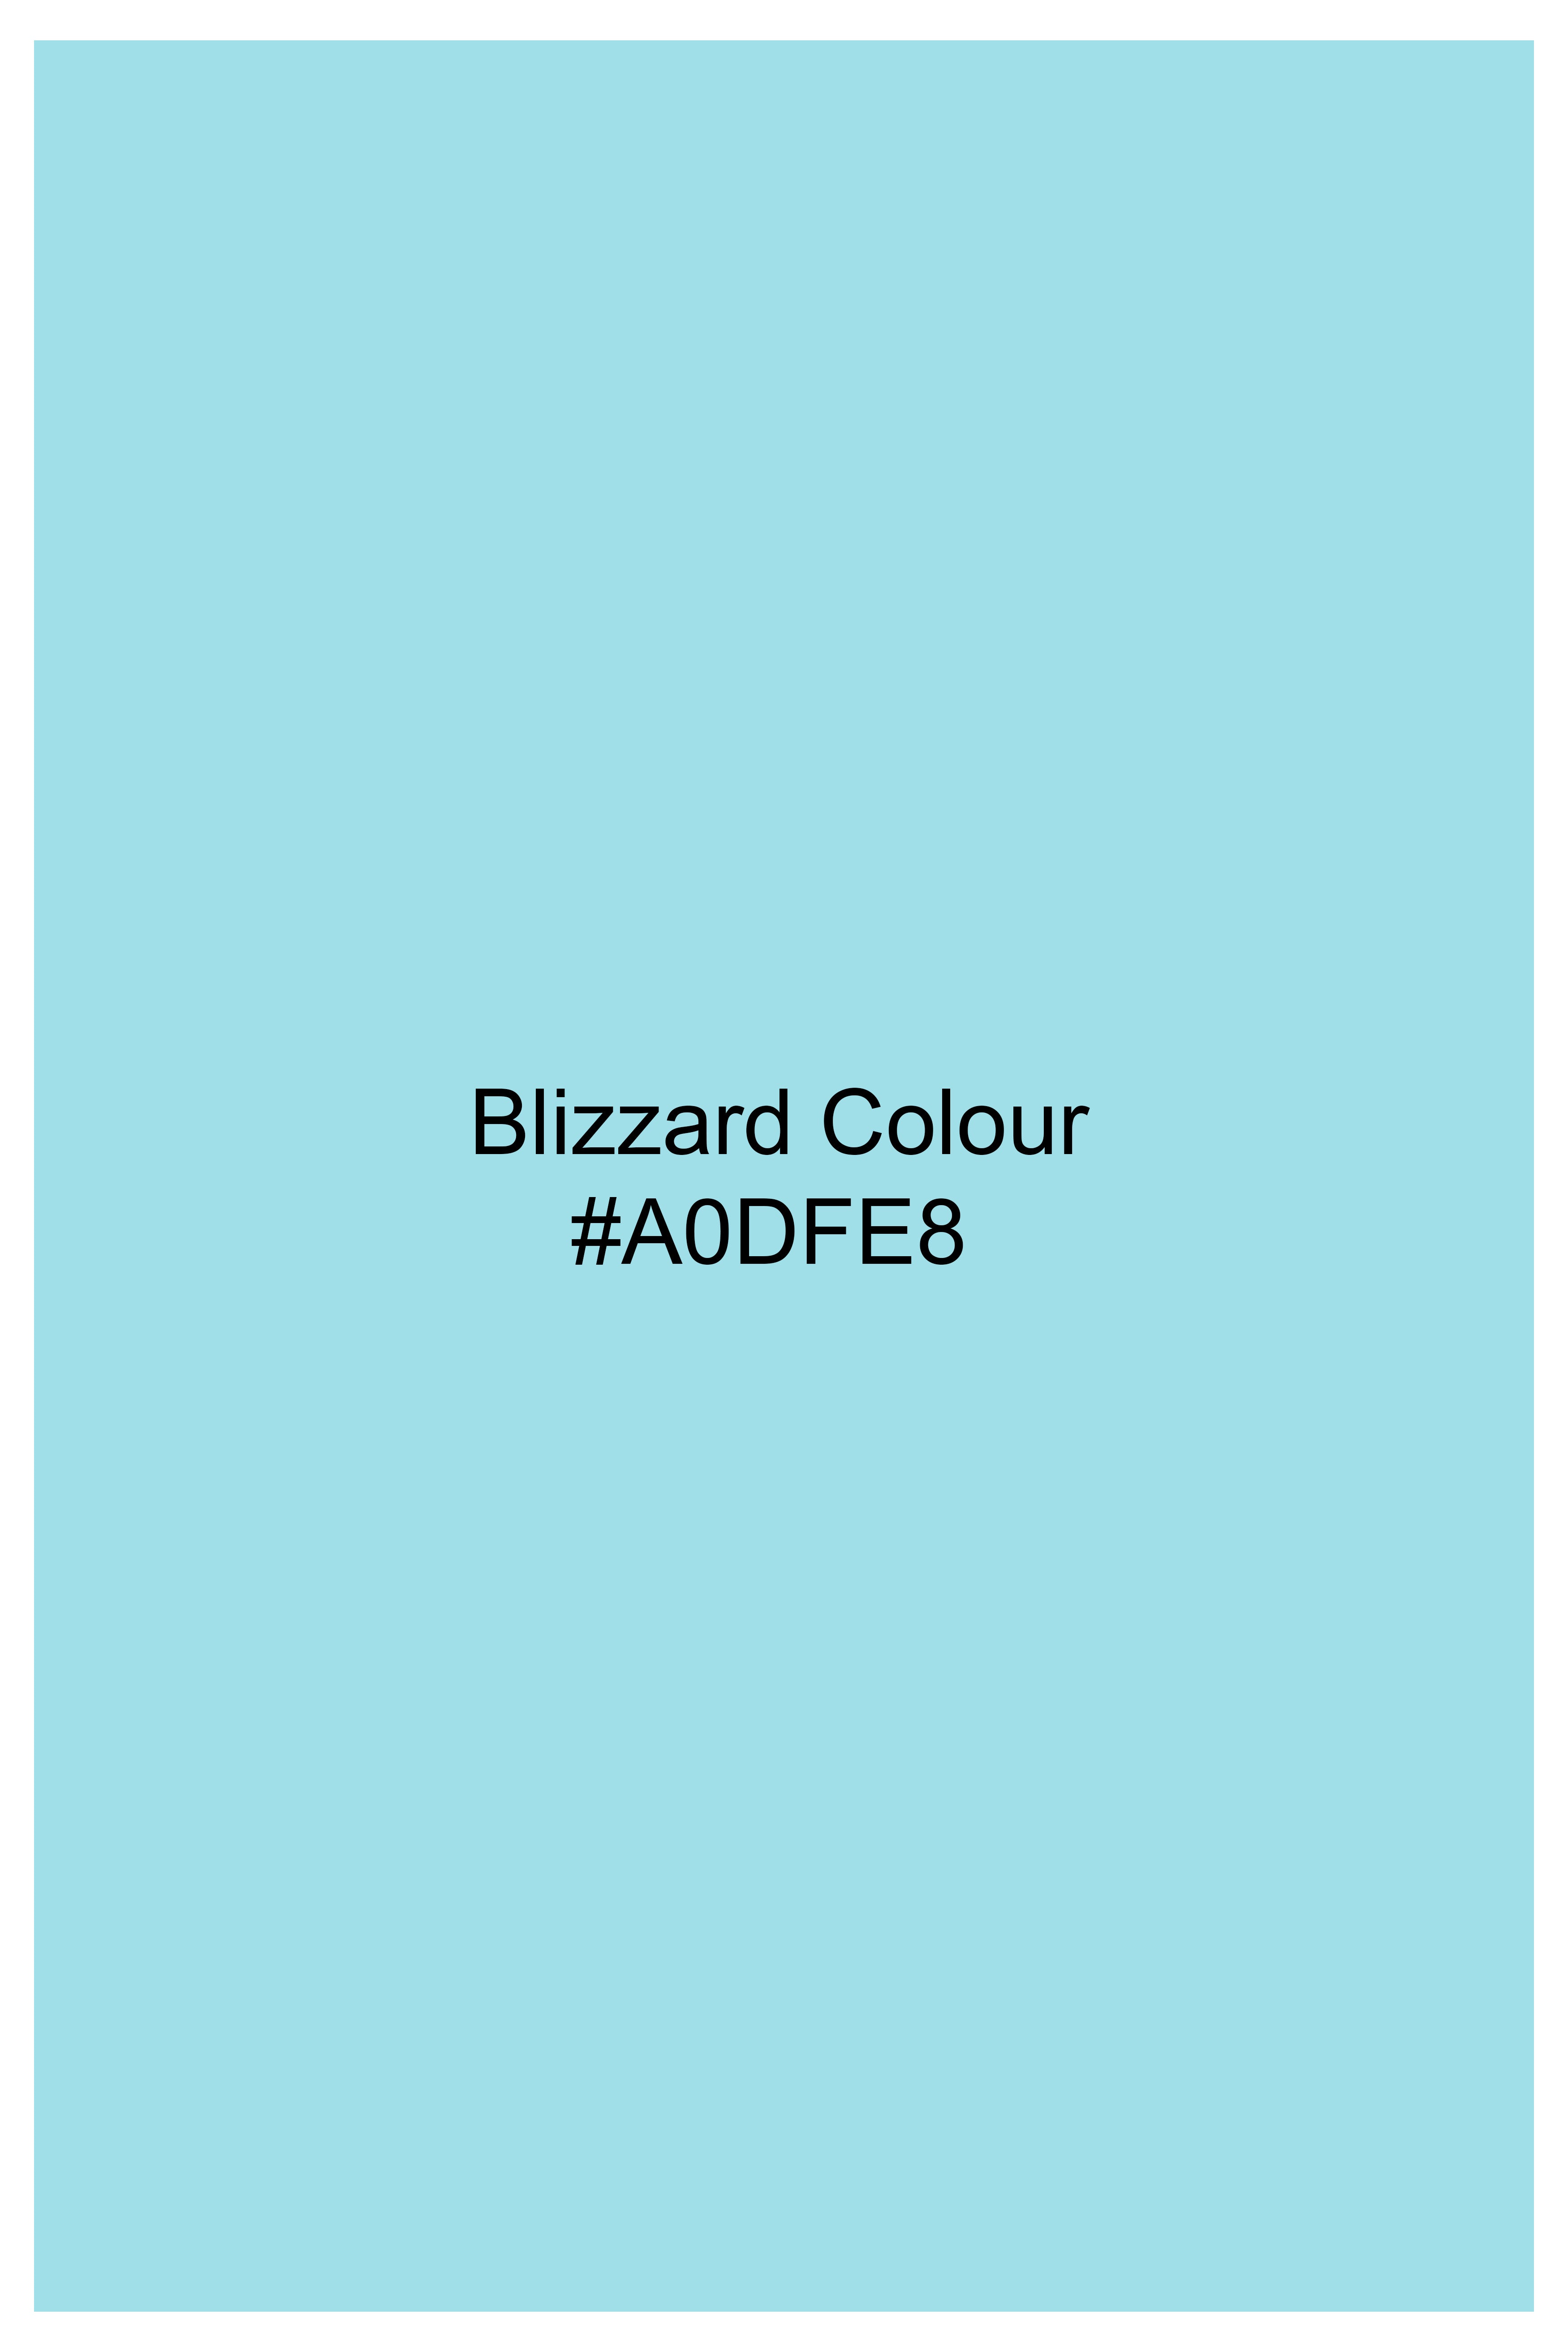 Blizzard Blue Lord Ganesha Printed Subtle Sheen Super Soft Premium Cotton Designer Shirt 8831-BLK-RPRT078-38, 8831-BLK-RPRT078-H-38, 8831-BLK-RPRT078-39, 8831-BLK-RPRT078-H-39, 8831-BLK-RPRT078-40, 8831-BLK-RPRT078-H-40, 8831-BLK-RPRT078-42, 8831-BLK-RPRT078-H-42, 8831-BLK-RPRT078-44, 8831-BLK-RPRT078-H-44, 8831-BLK-RPRT078-46, 8831-BLK-RPRT078-H-46, 8831-BLK-RPRT078-48, 8831-BLK-RPRT078-H-48, 8831-BLK-RPRT078-50, 8831-BLK-RPRT078-H-50, 8831-BLK-RPRT078-52, 8831-BLK-RPRT078-H-52